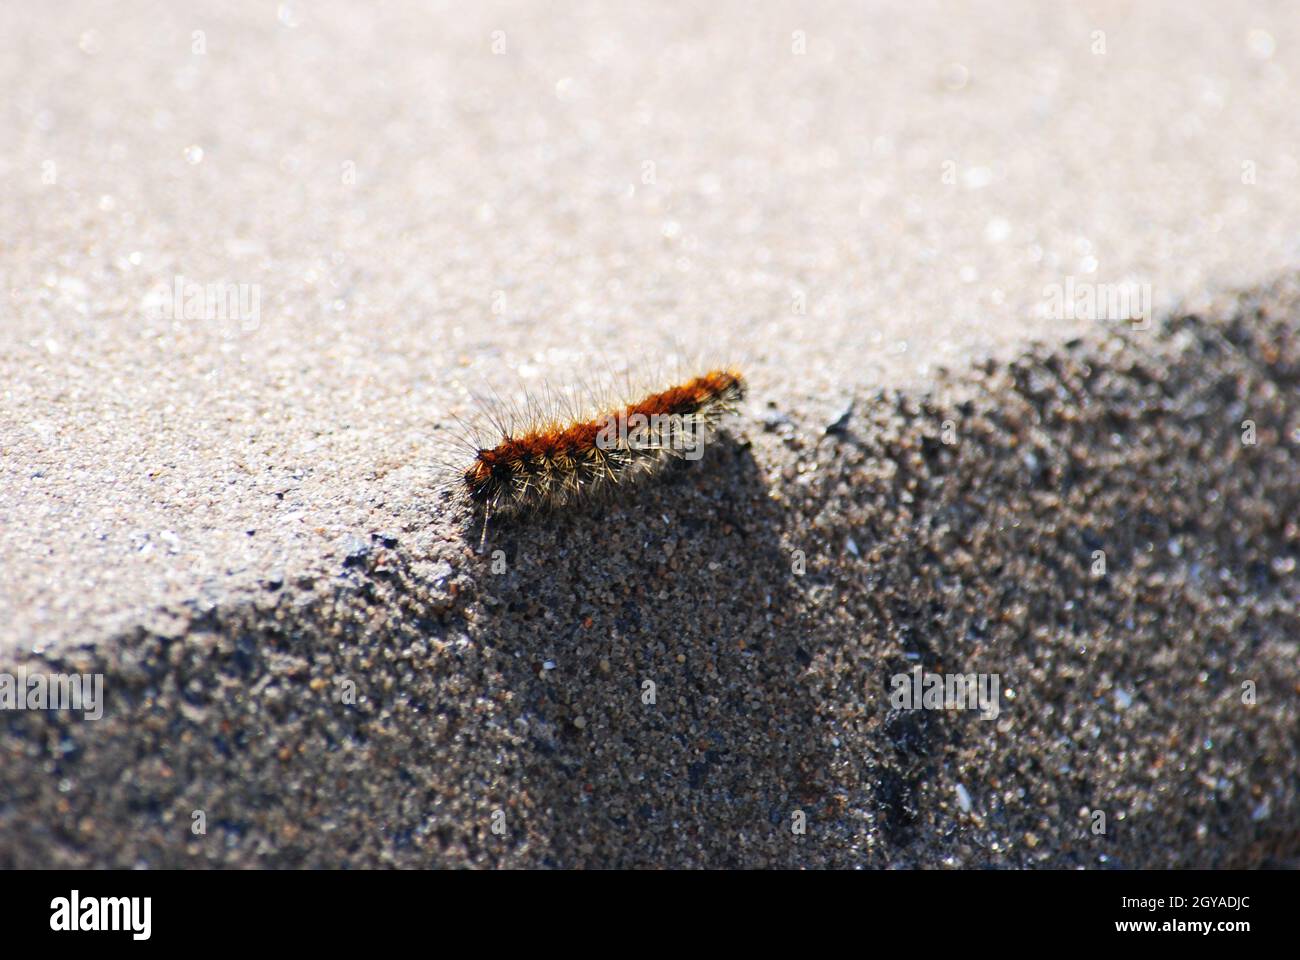 Thaumetopoea pityocampa caterpillar on a sidewalk Stock Photo